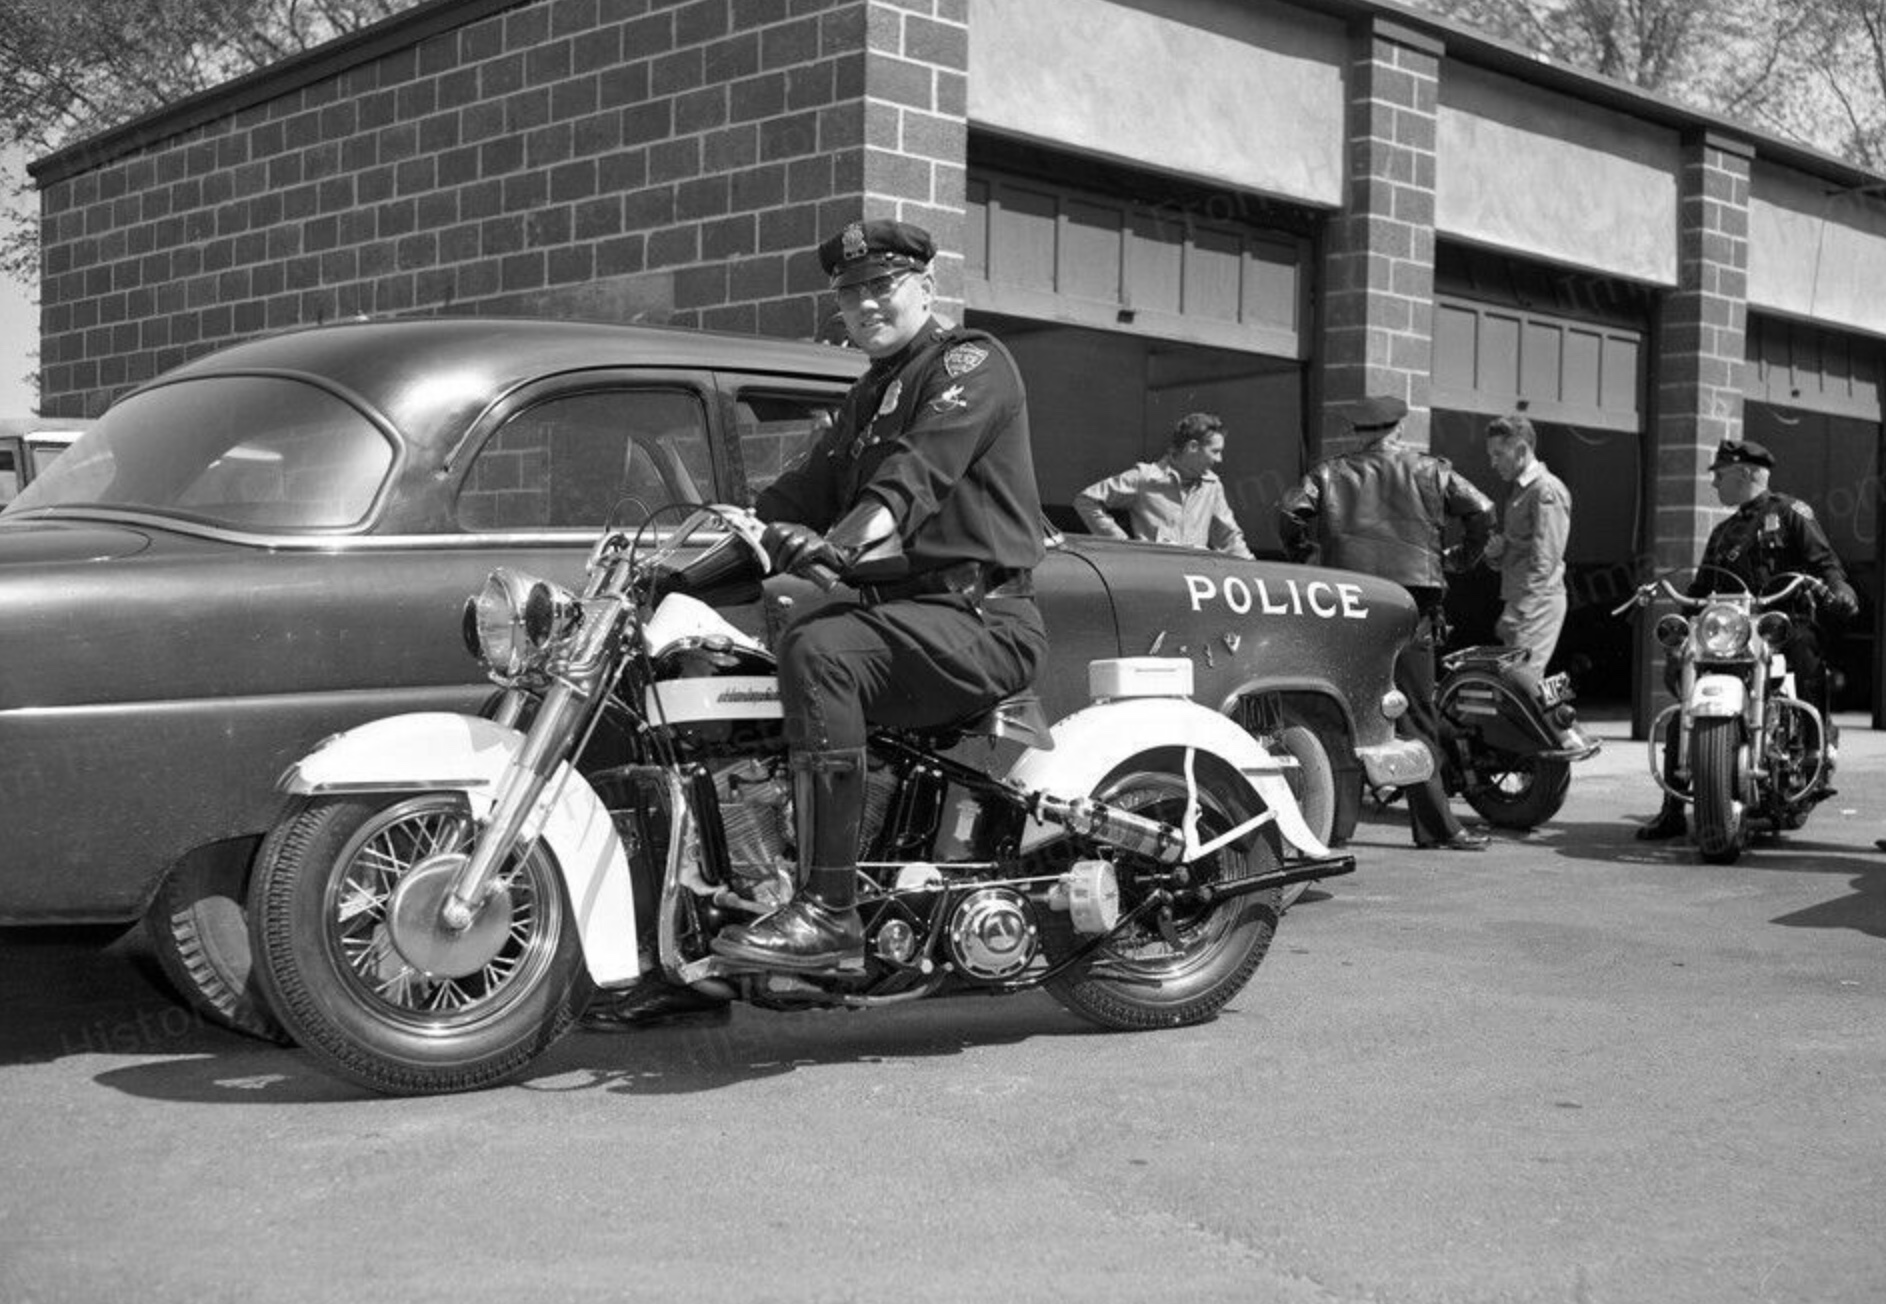 1954 - Harley-Davidson foto de epoca